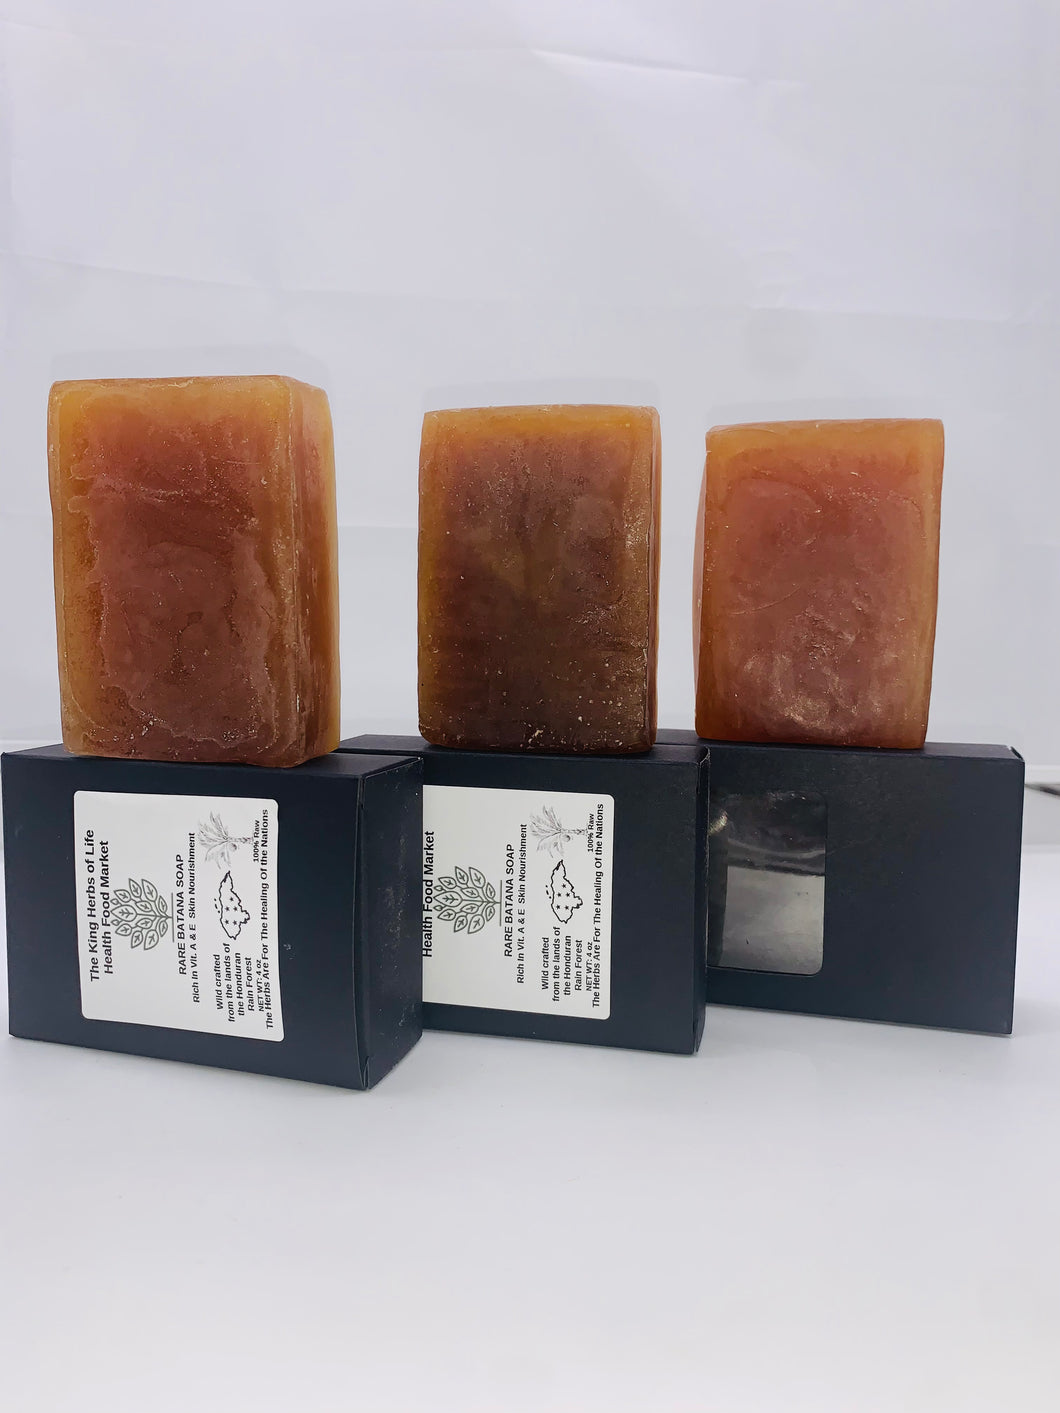 Batana Beauty soap Made with Rare Batana Oil imported from Honduras 100% natural